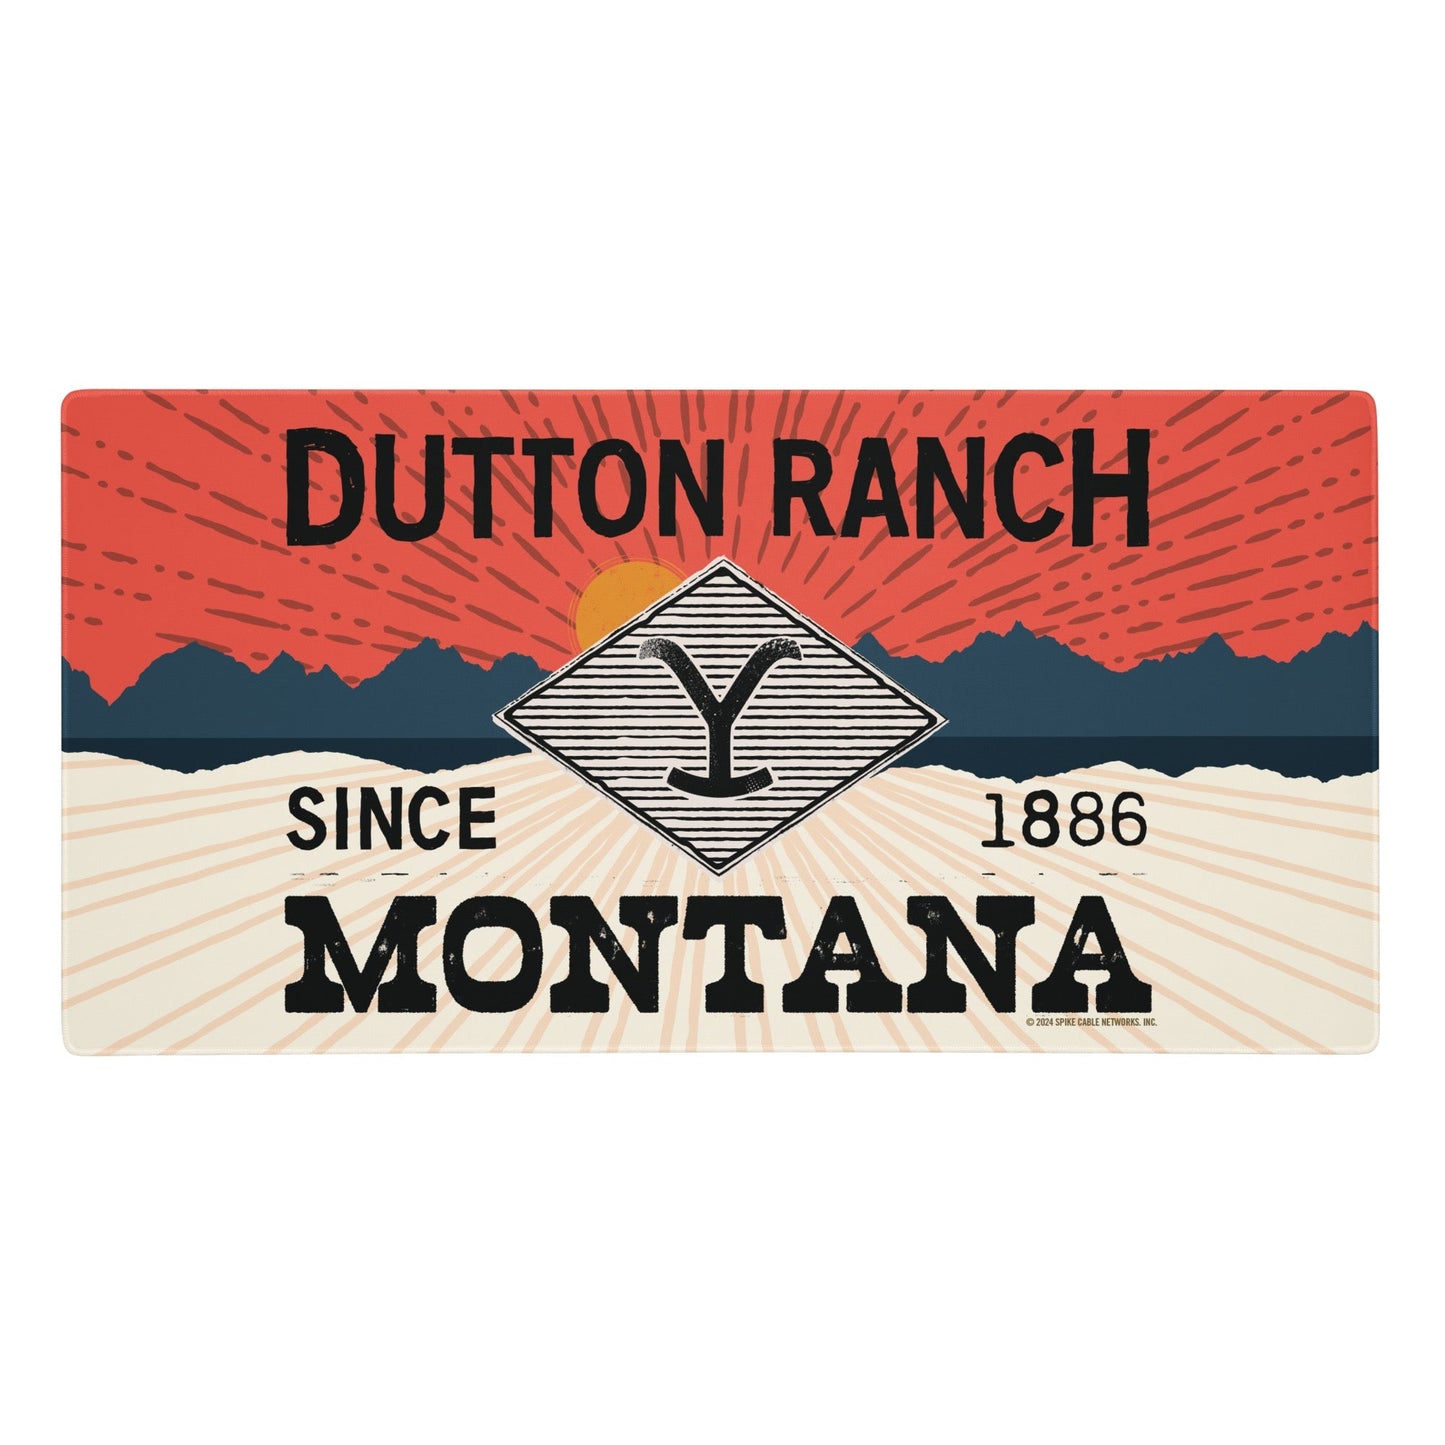 Yellowstone Dutton Ranch Montana Desk Mat - Paramount Shop